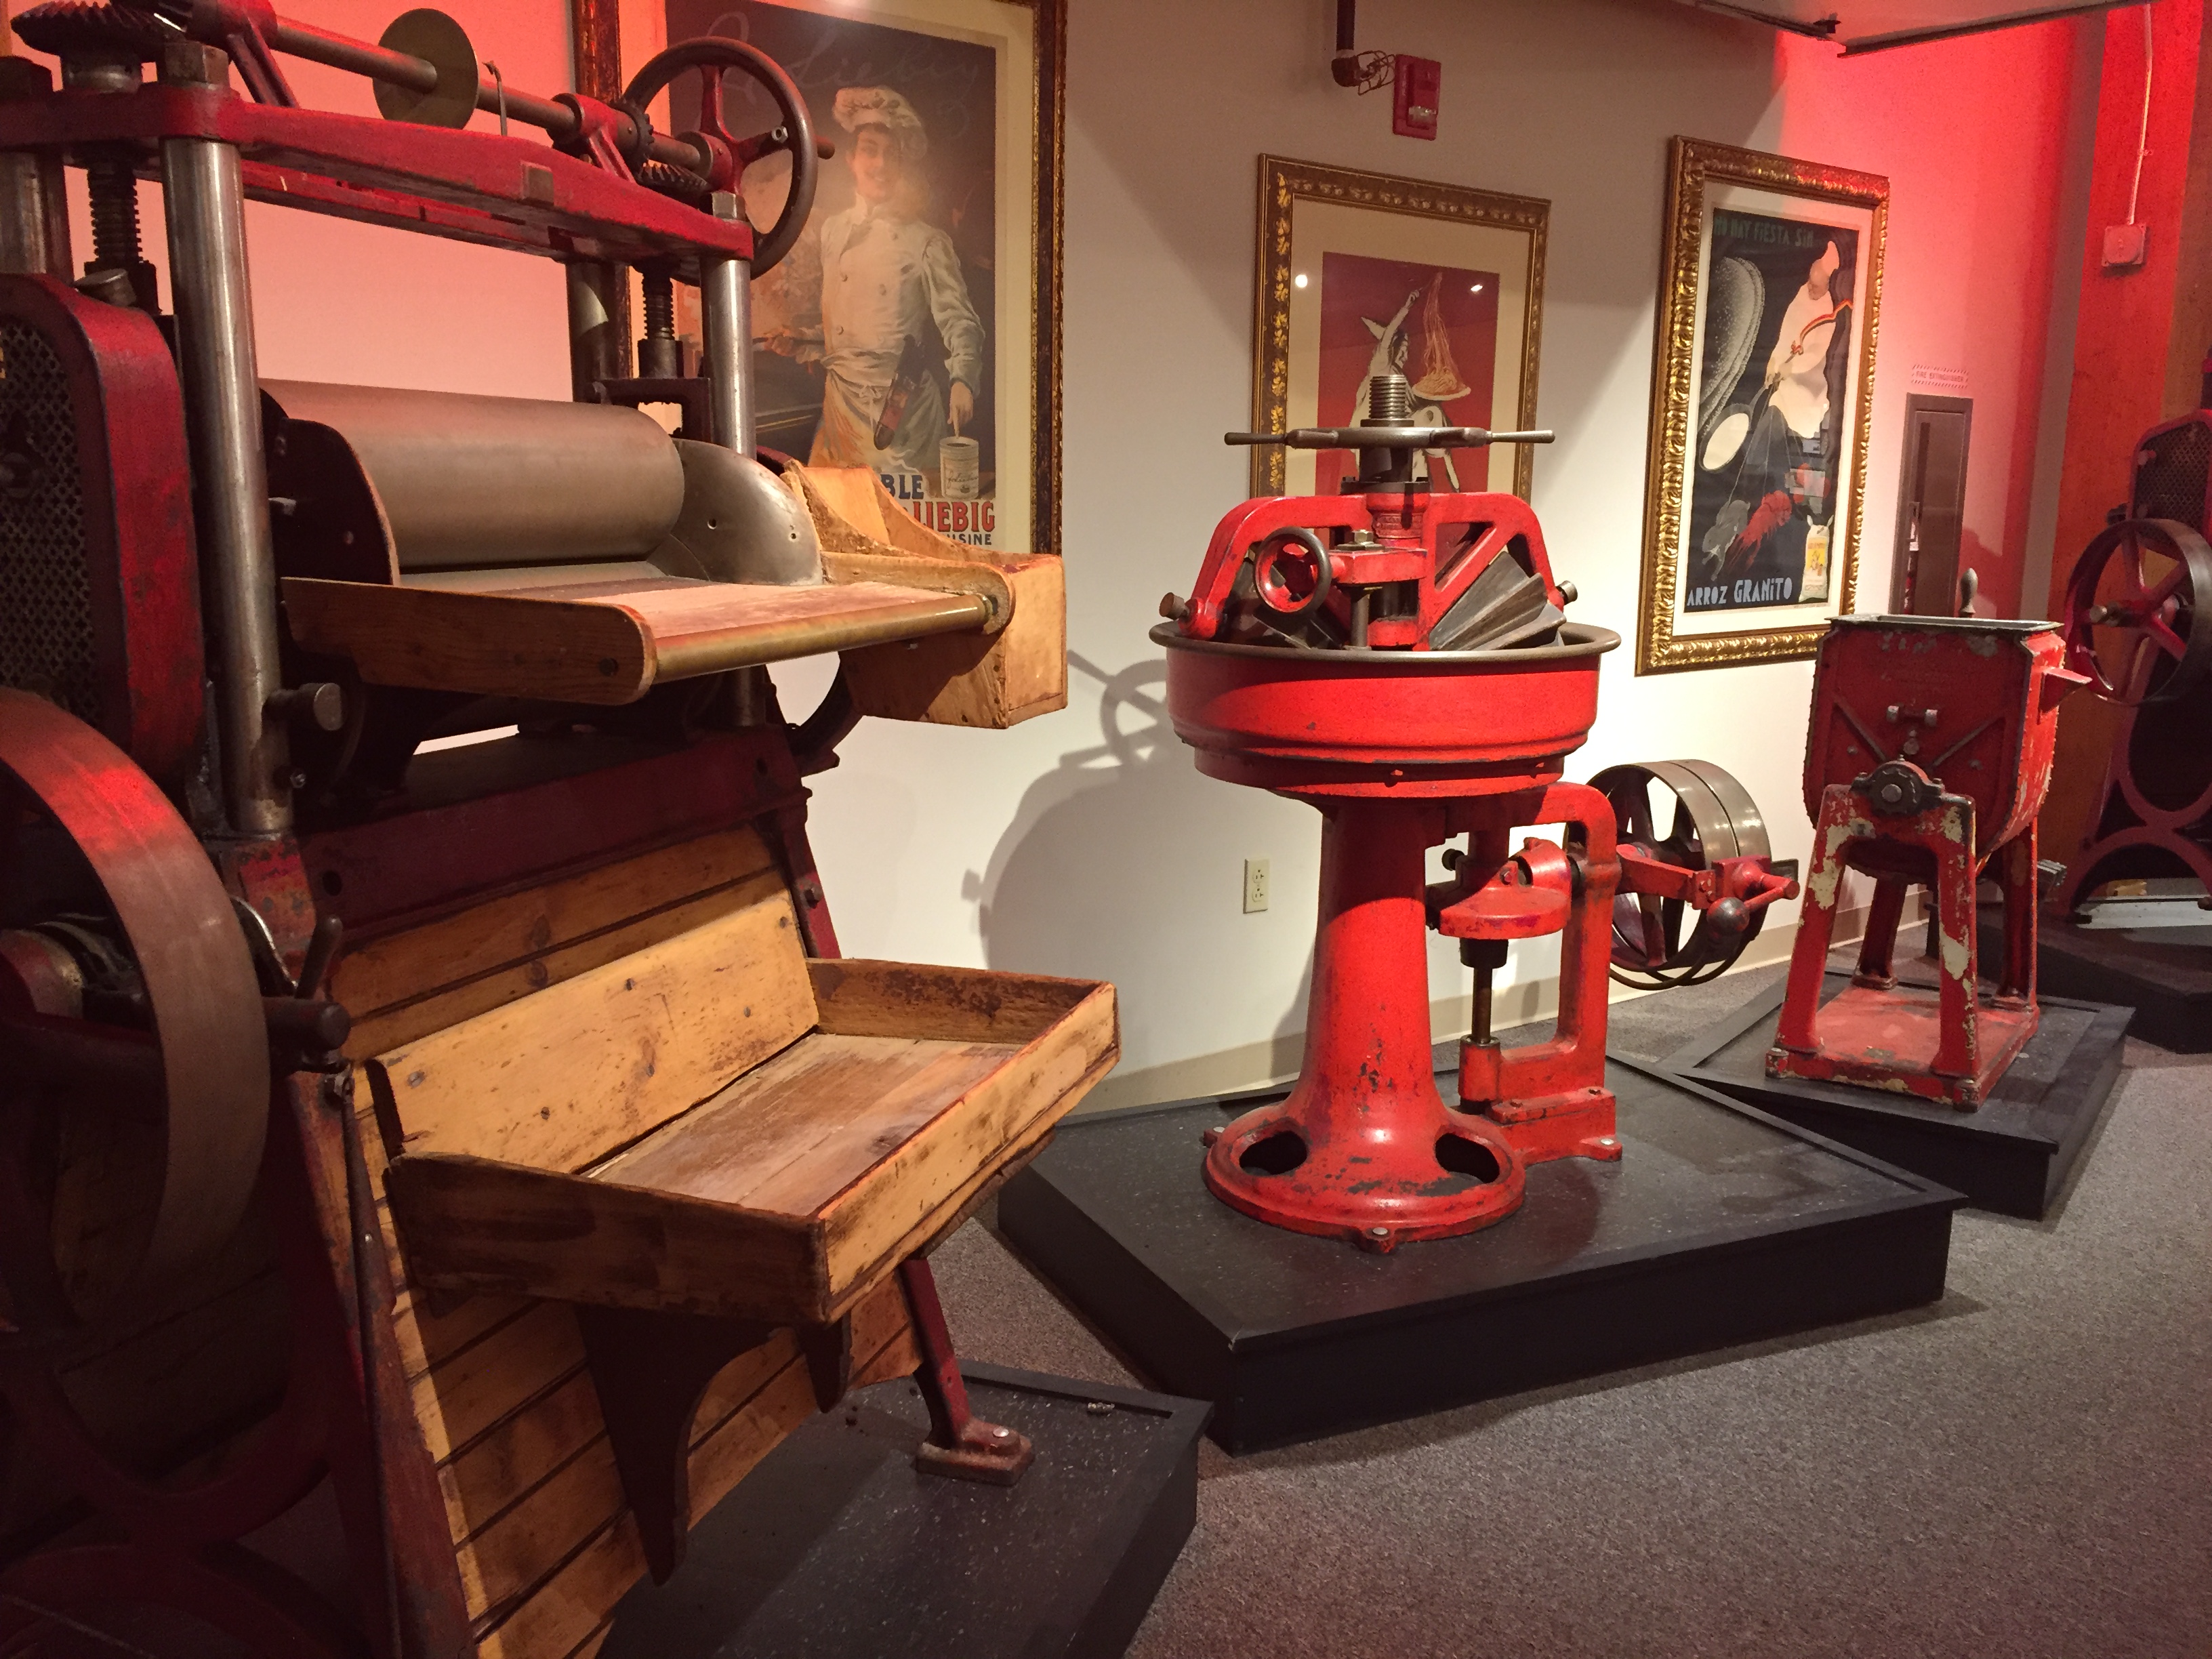 Vintage machinery and tools on display